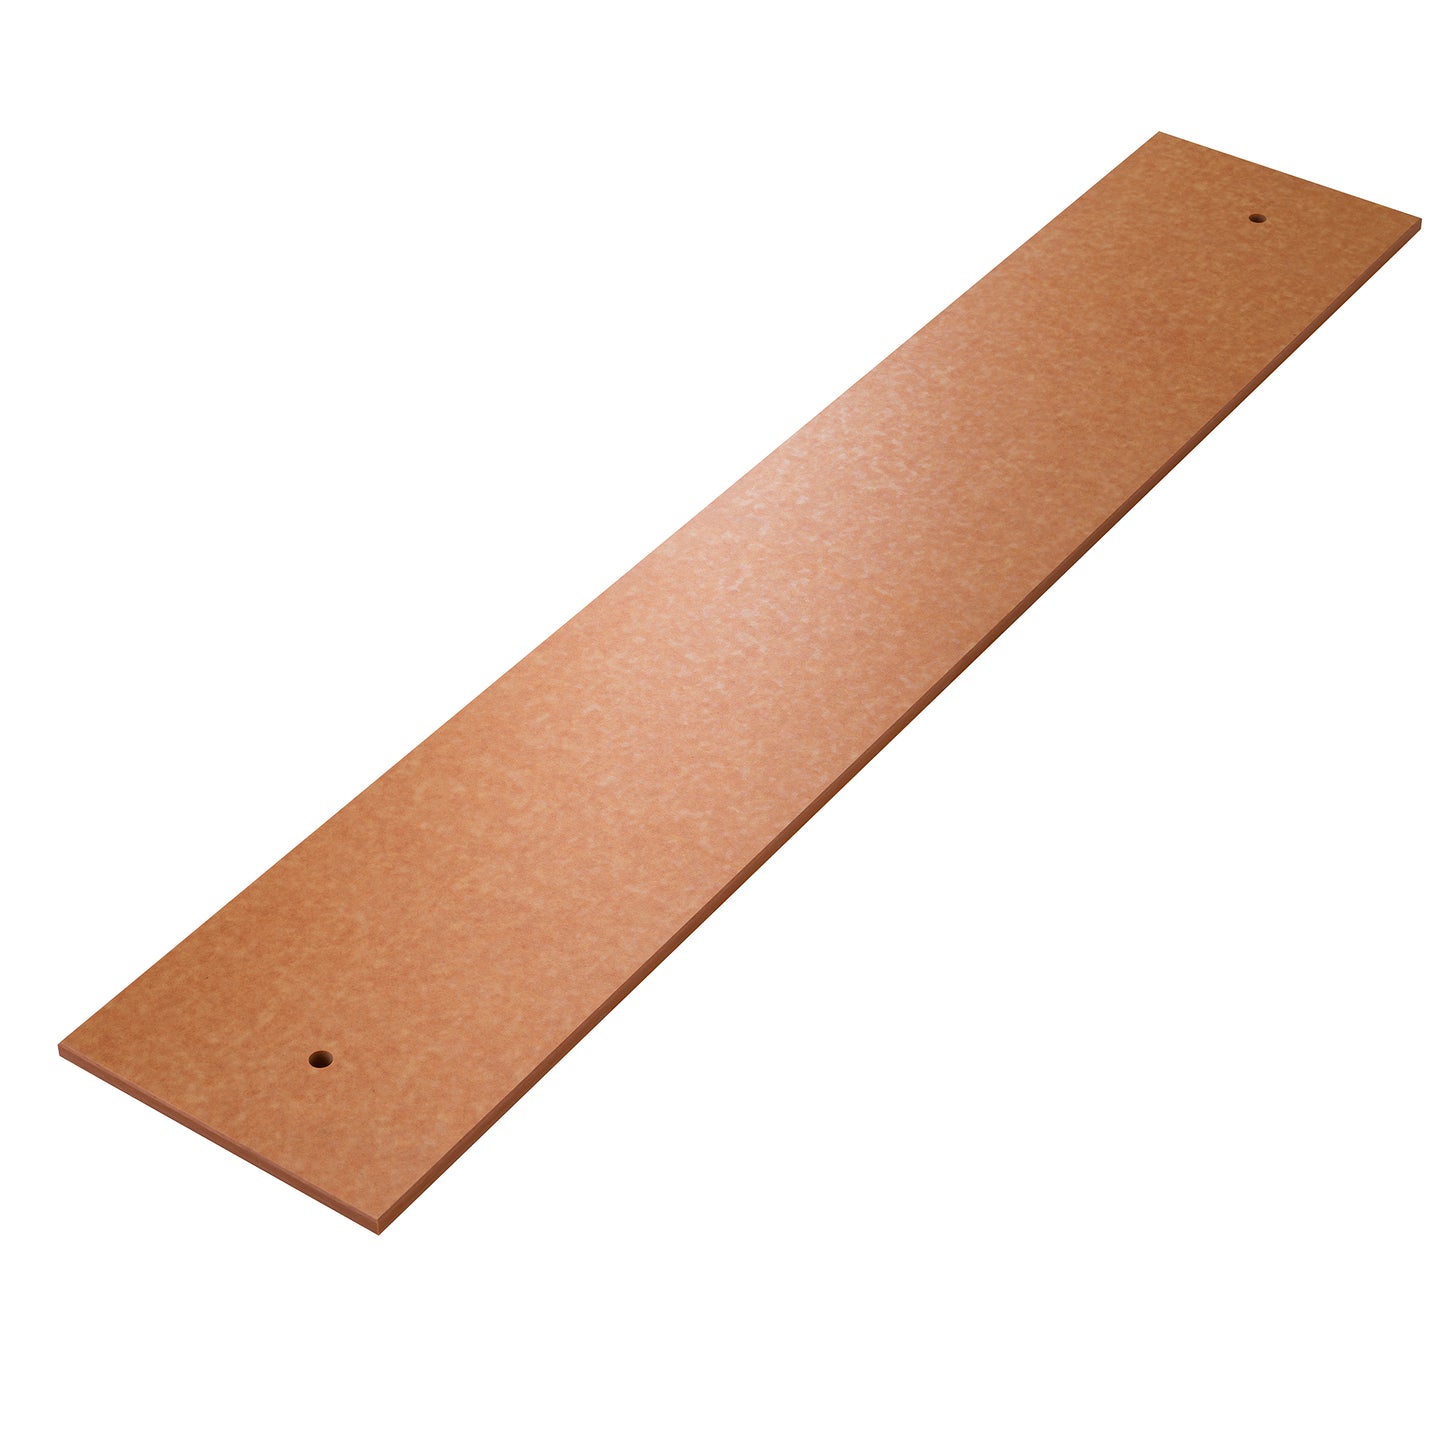 Composite wood-tone cutting board - 1/2" X 8-7/8" X 60" (SKU - 820618)